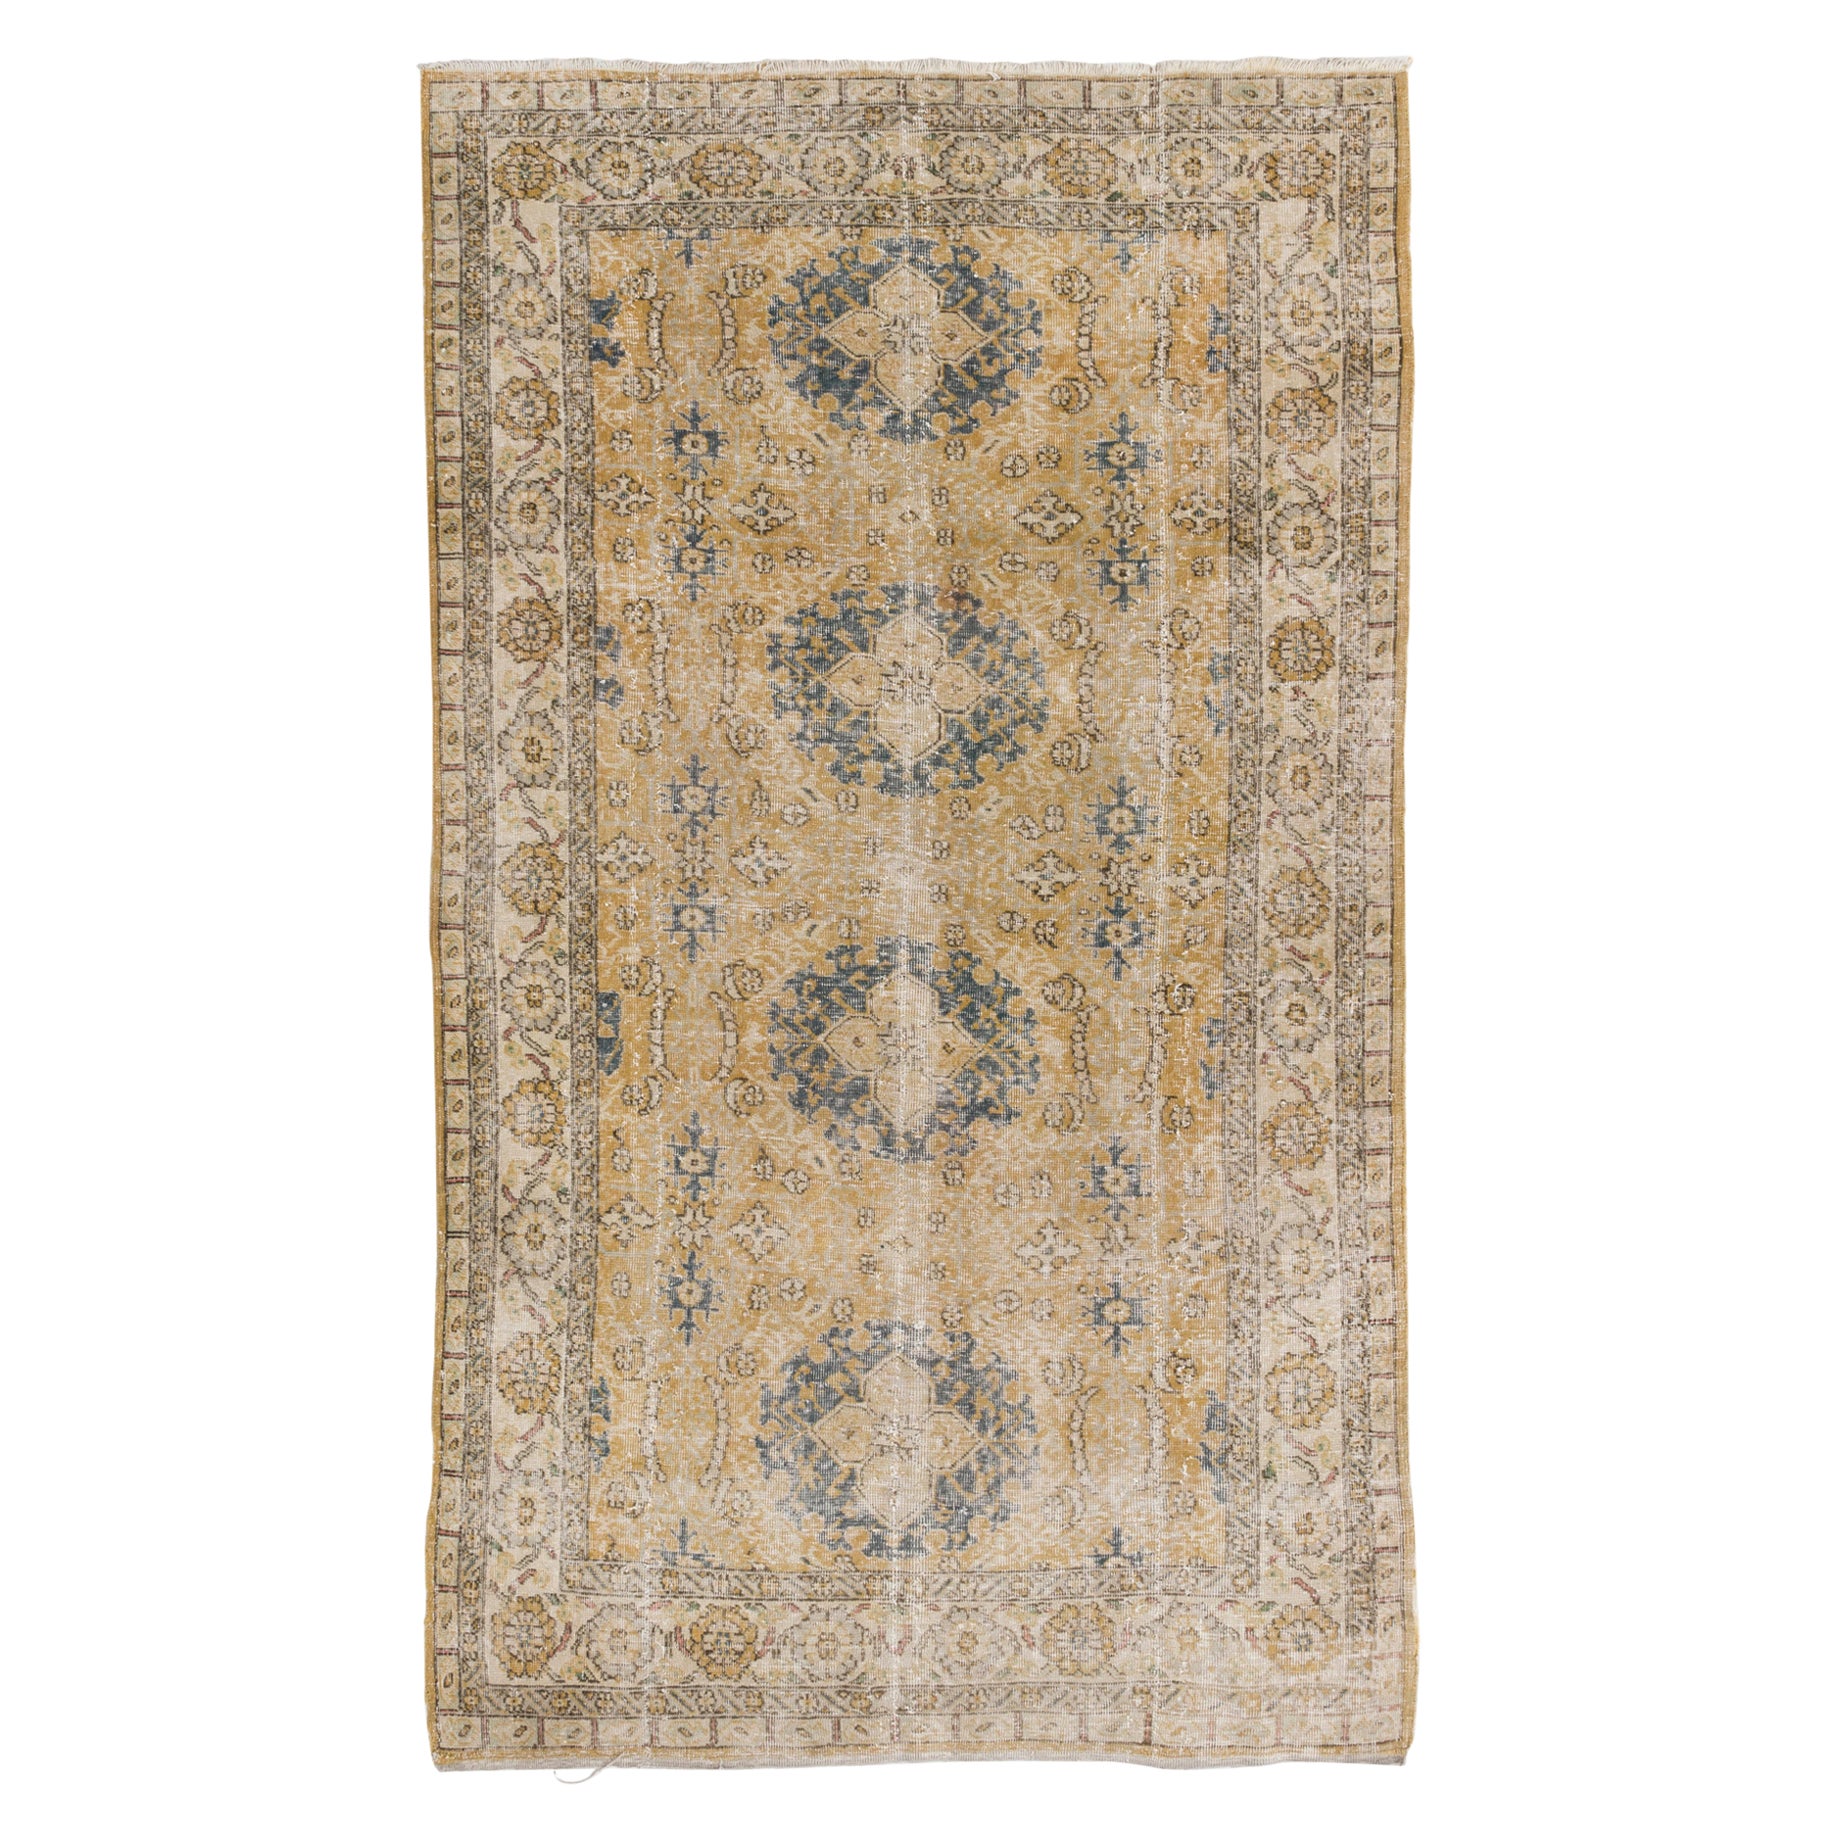 5x8 Ft Vintage Central Anatolian Area Rug, Shabby Chic Handmade Wool Carpet